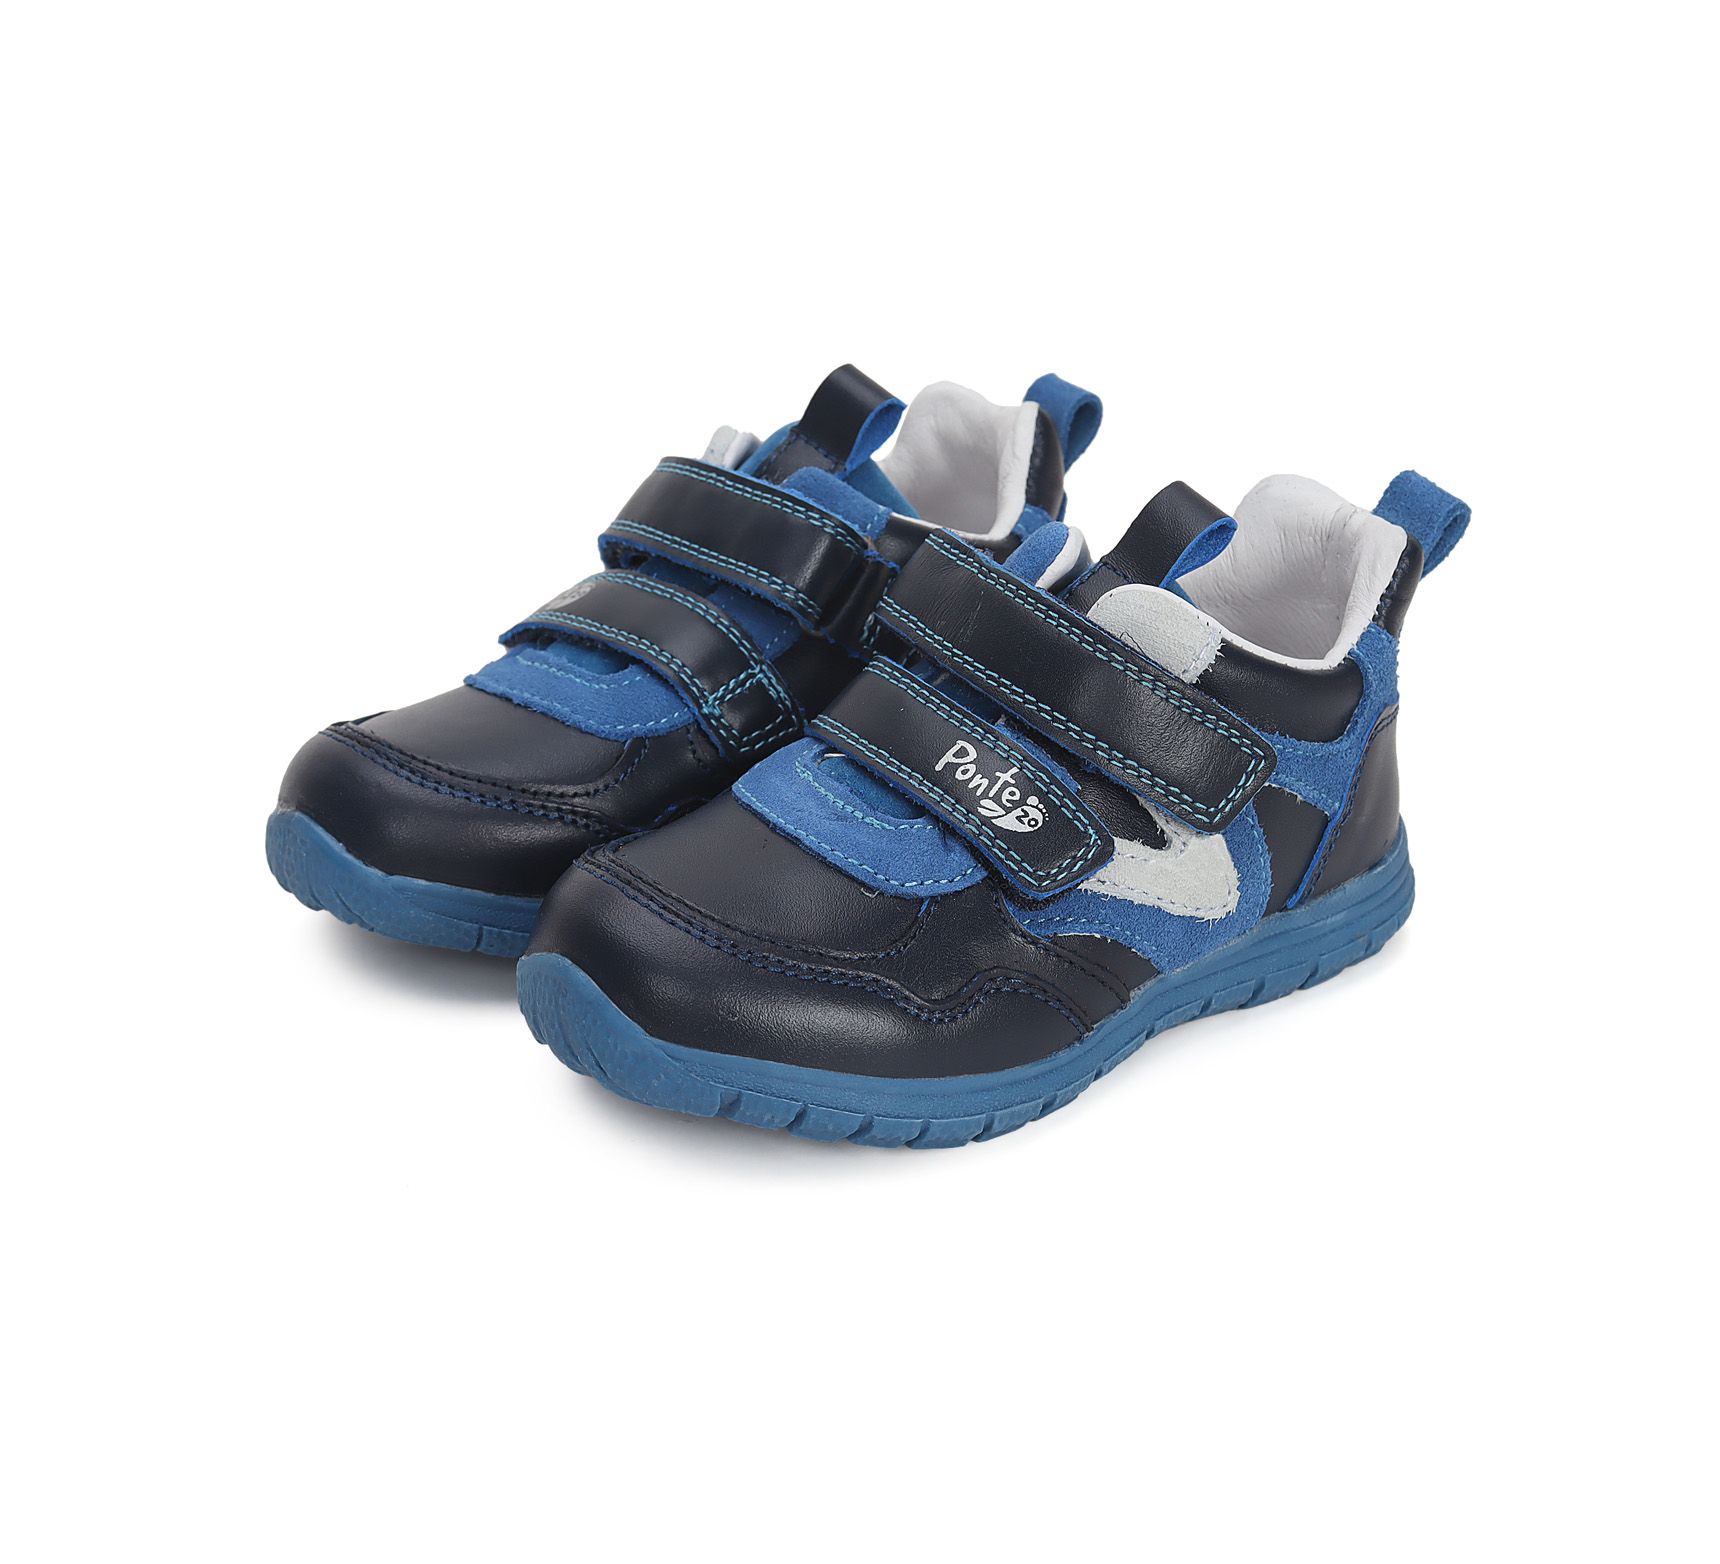 PONTE20 átmeneti bőr cipő DA03-4-1723A ROYAL BLUE 23-27 méretben